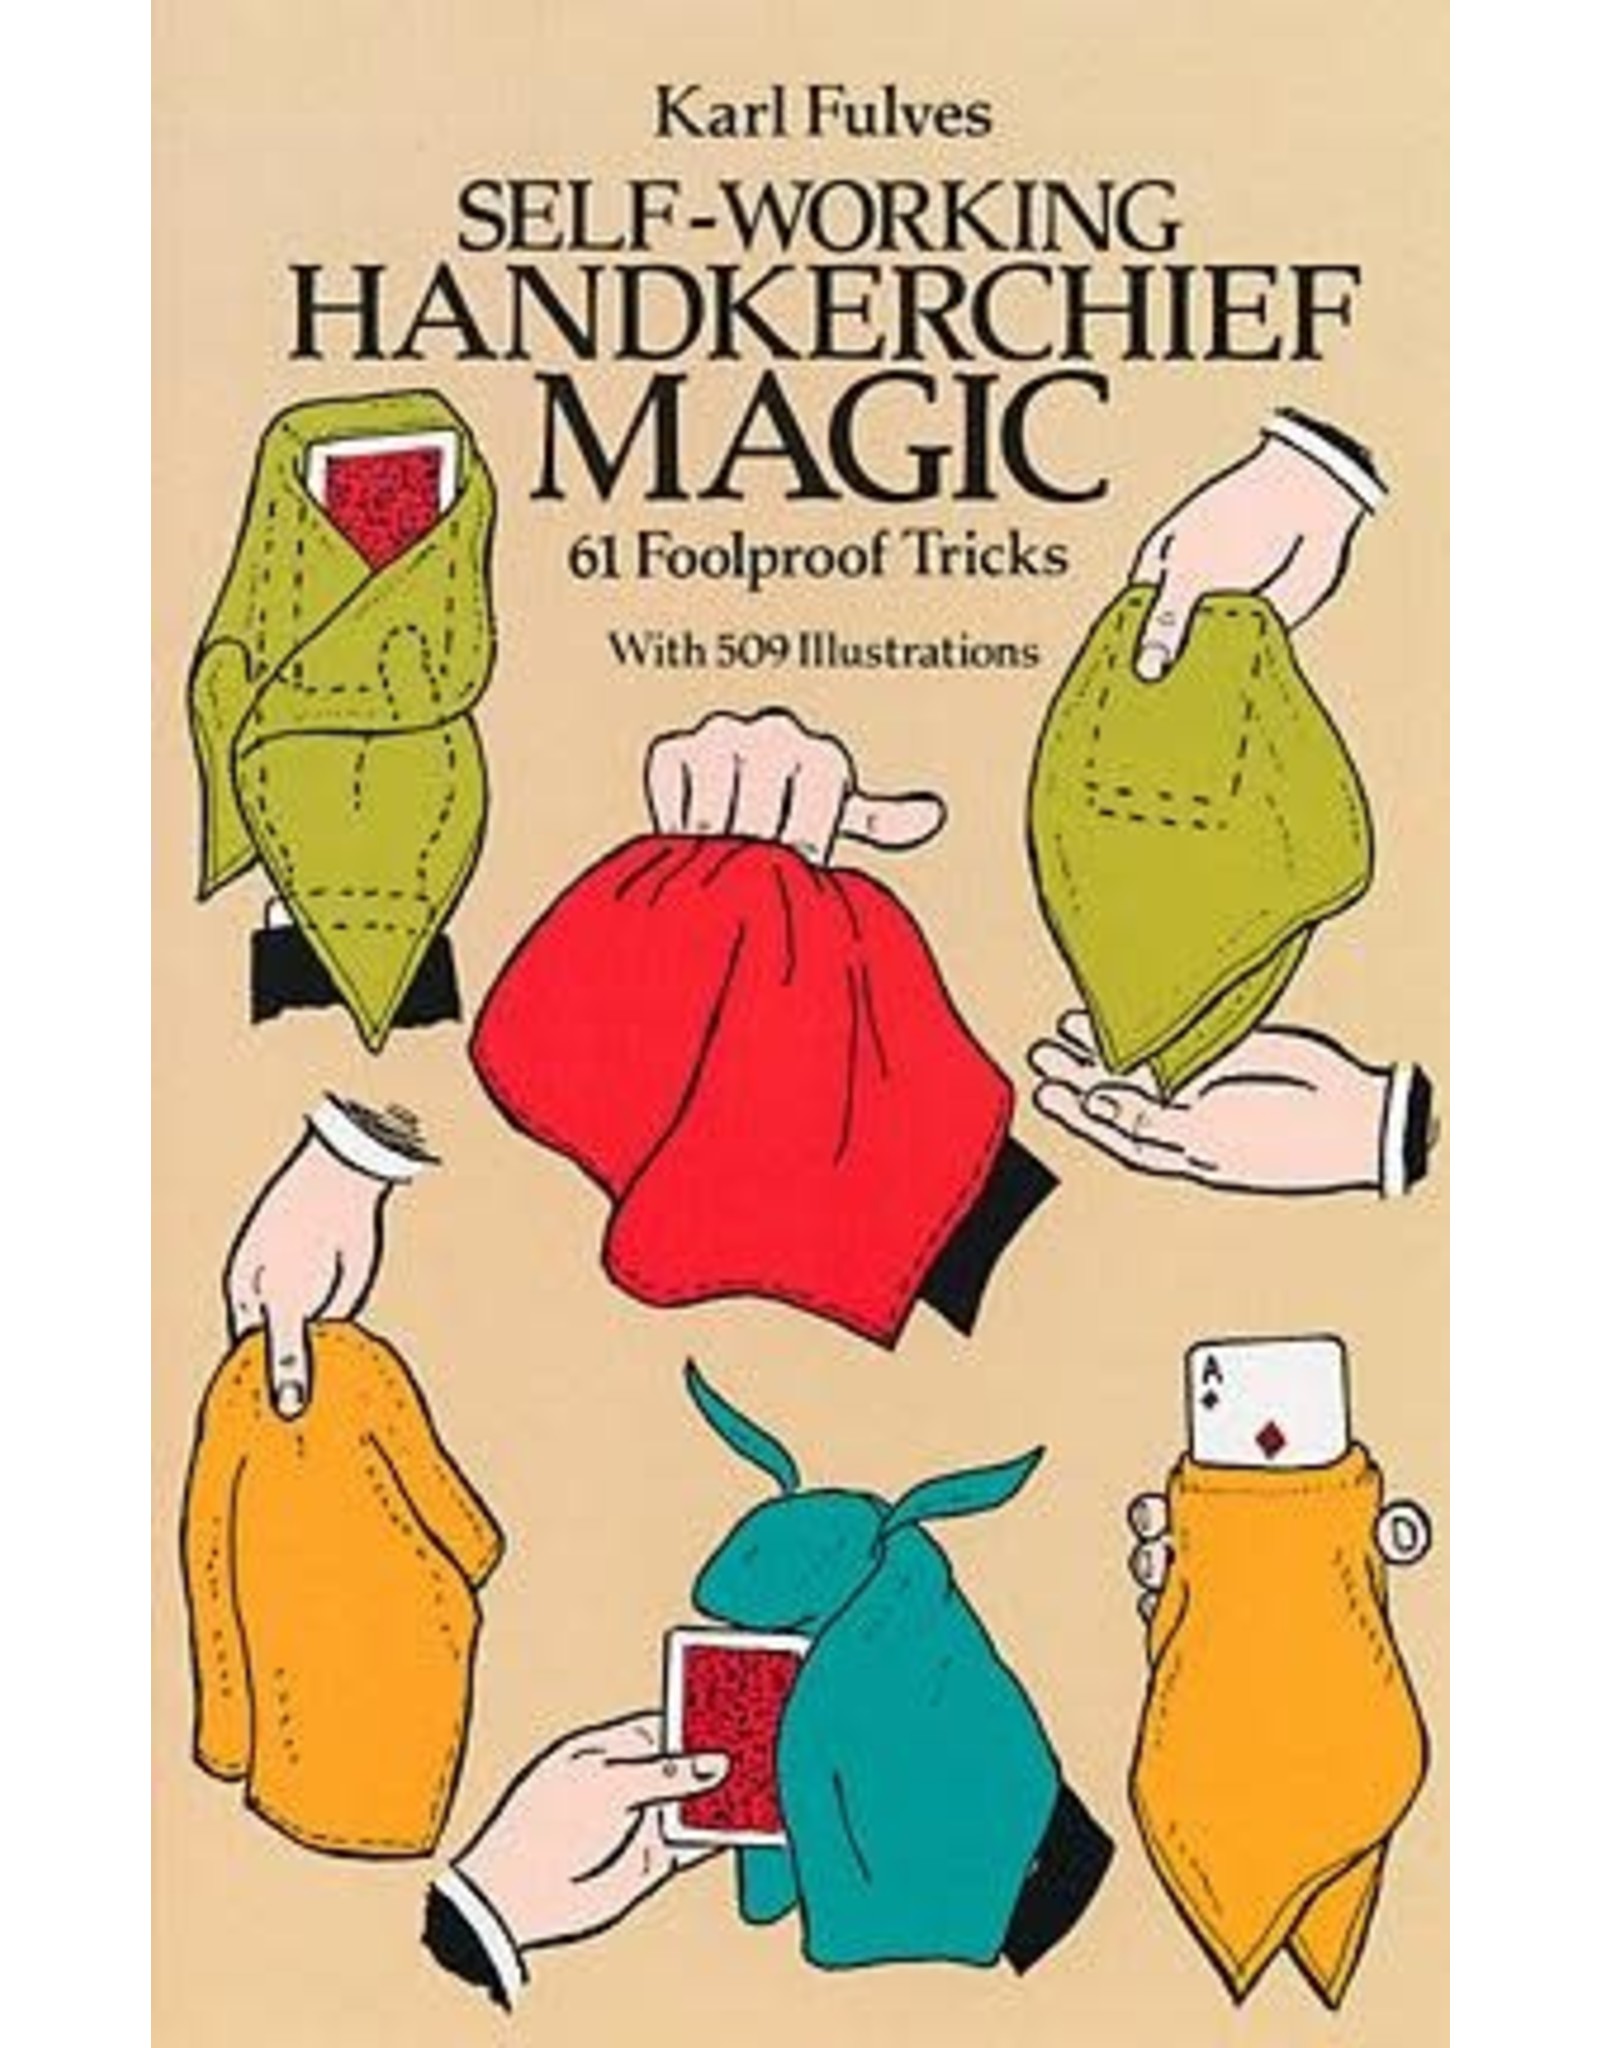 Self-Working Handkerchief Magic: 61 Foolproof Tricks